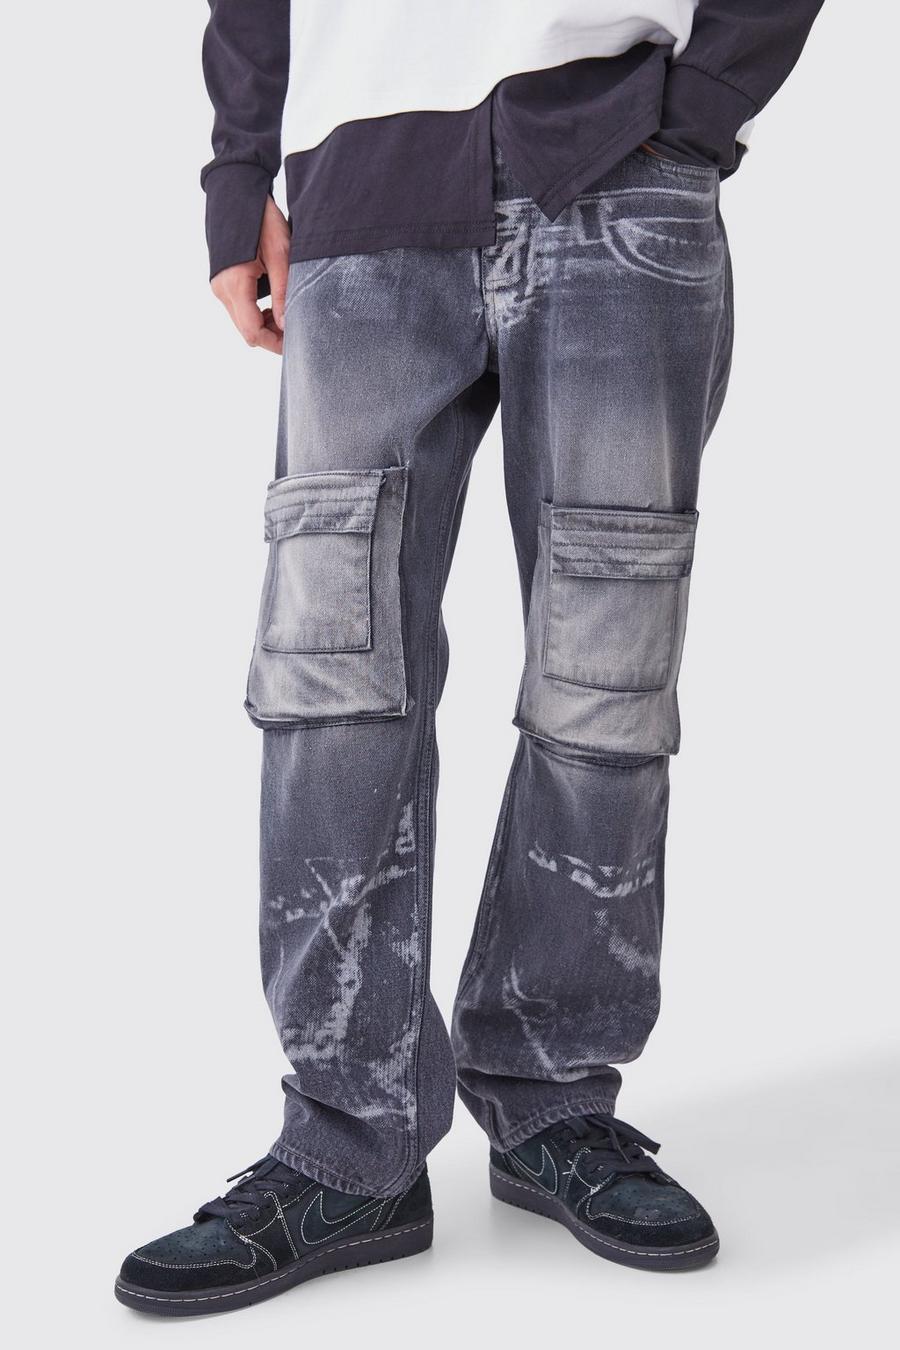 Lockere Jeans mit X-Ray Print und Acid-Waschung, Washed black image number 1